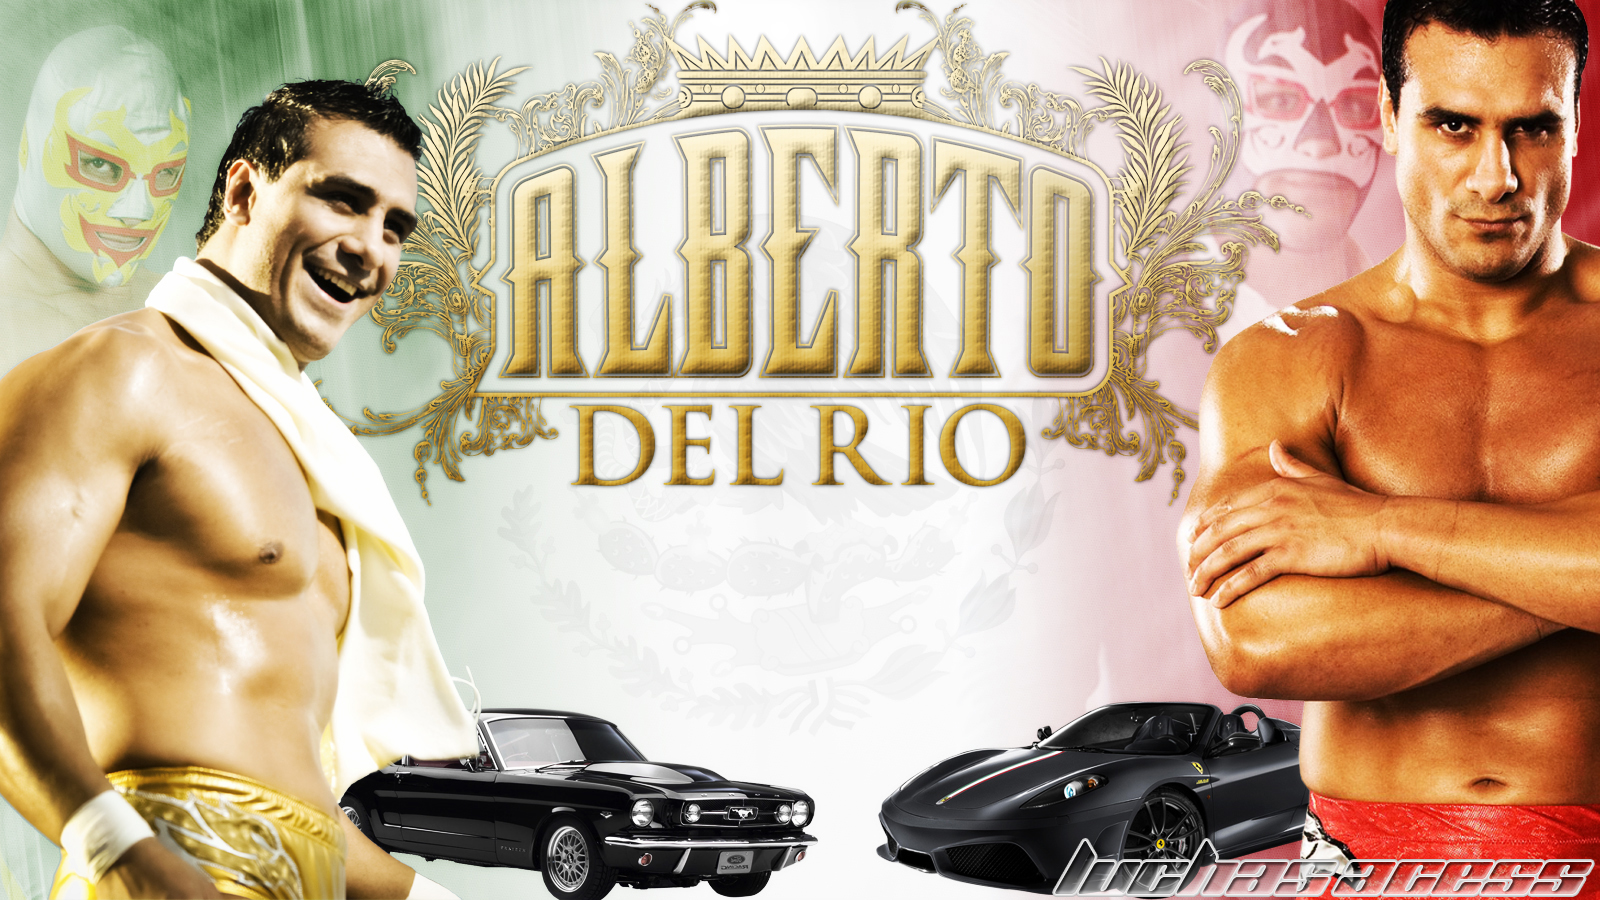 Del Rio Superstar Wallpaper Wwe Alberto